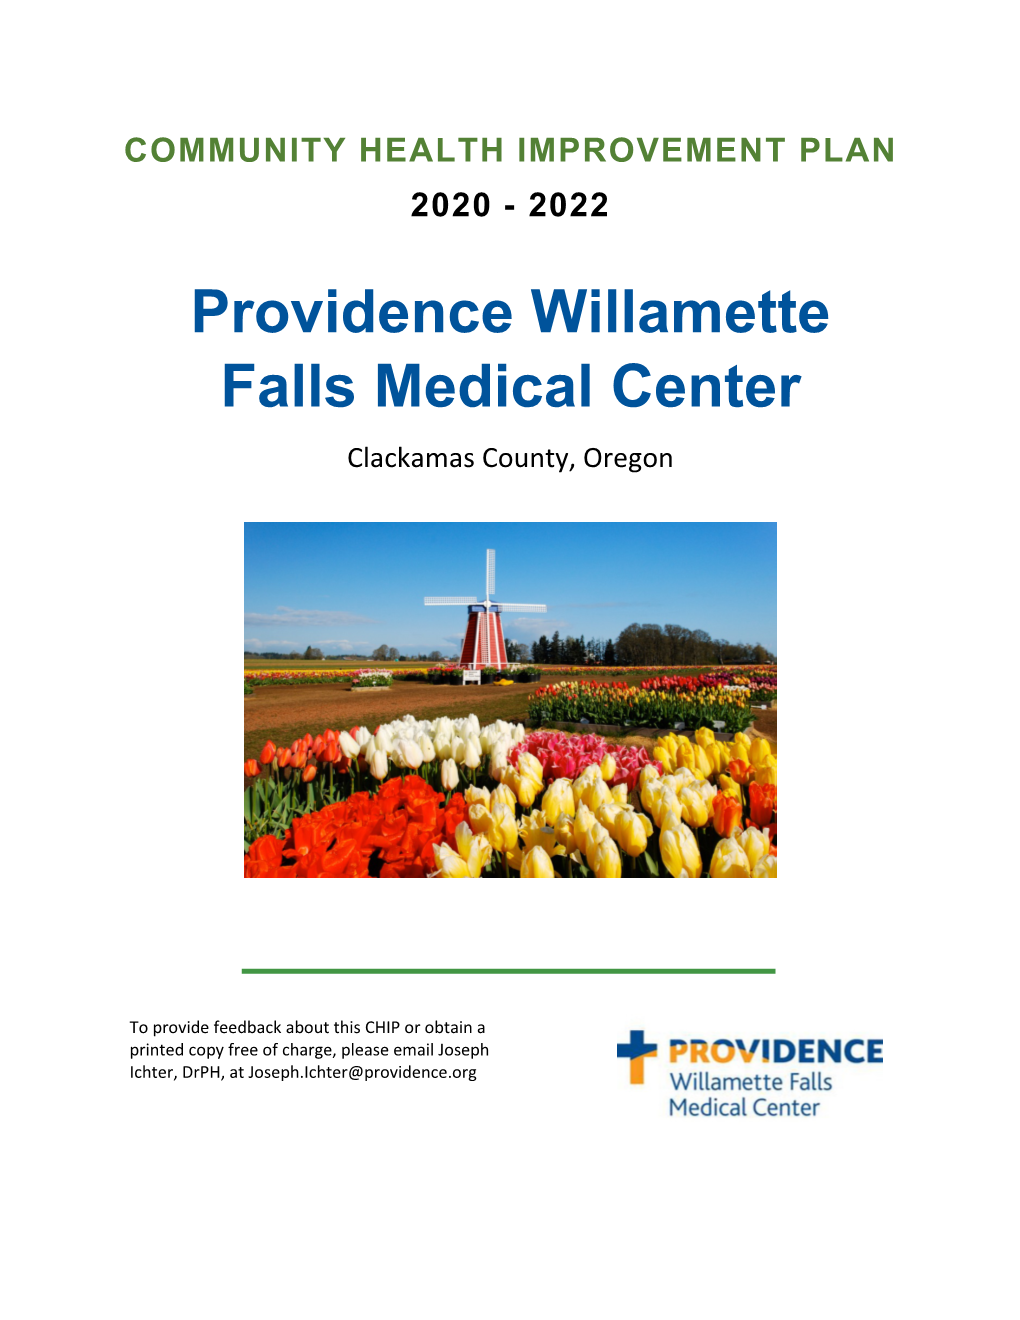 Providence Willamette Falls Medical Center Clackamas County, Oregon